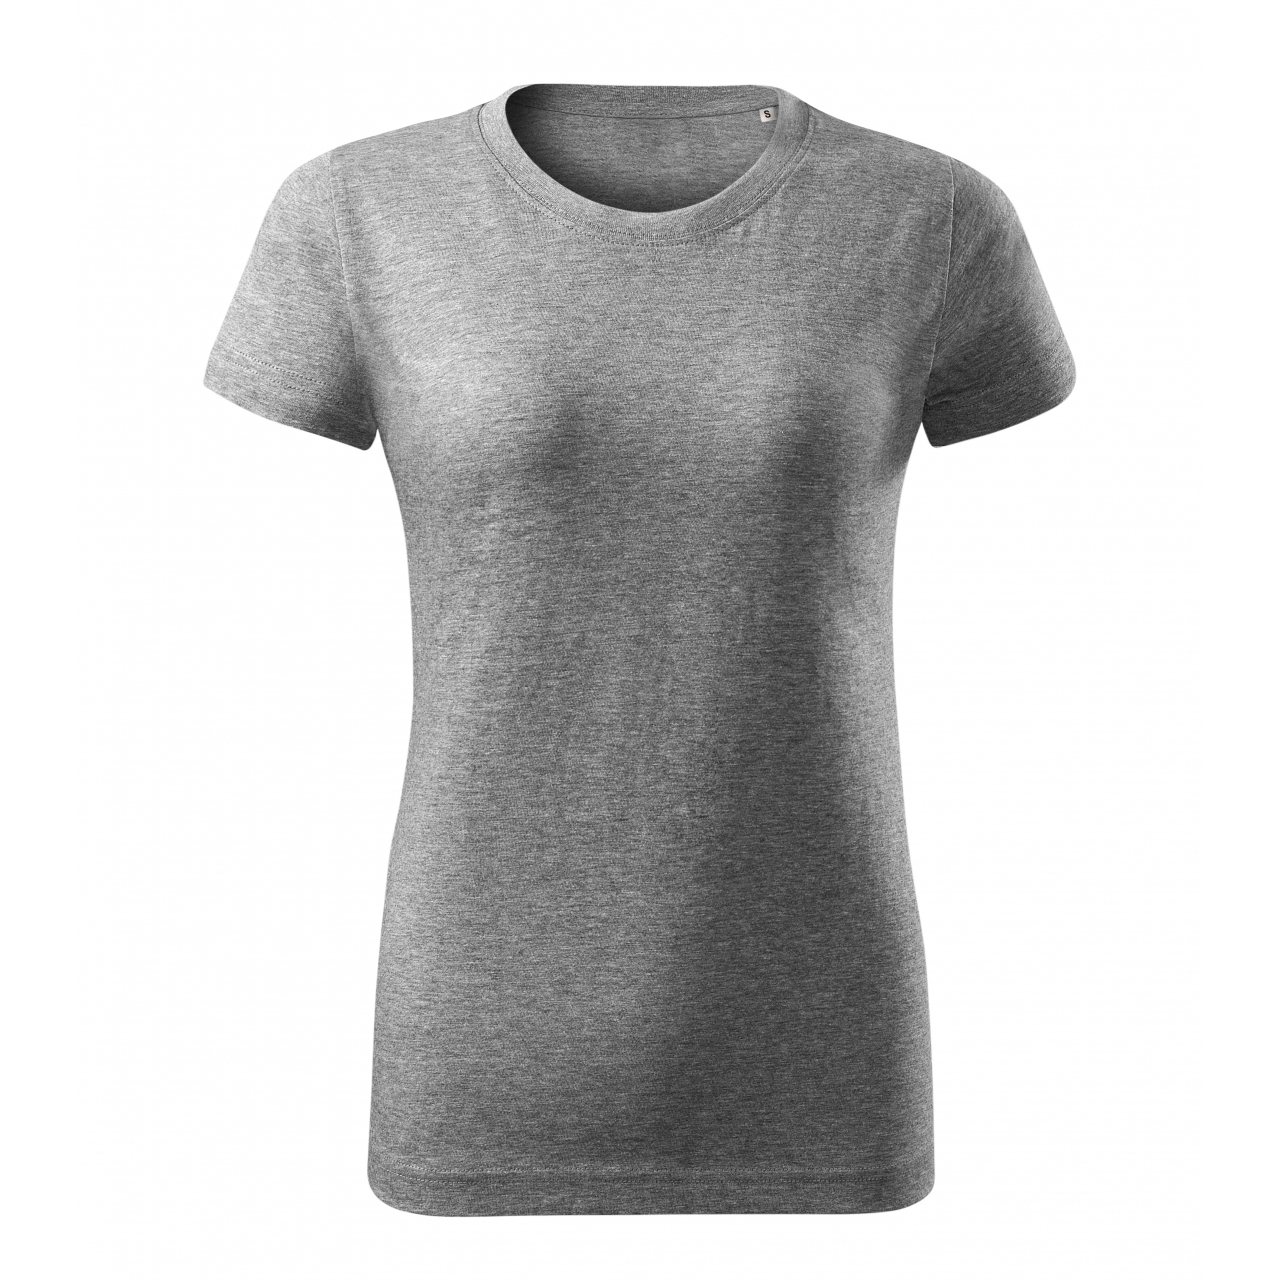 Tričko dámské Malfini Basic Free - šedé, XL